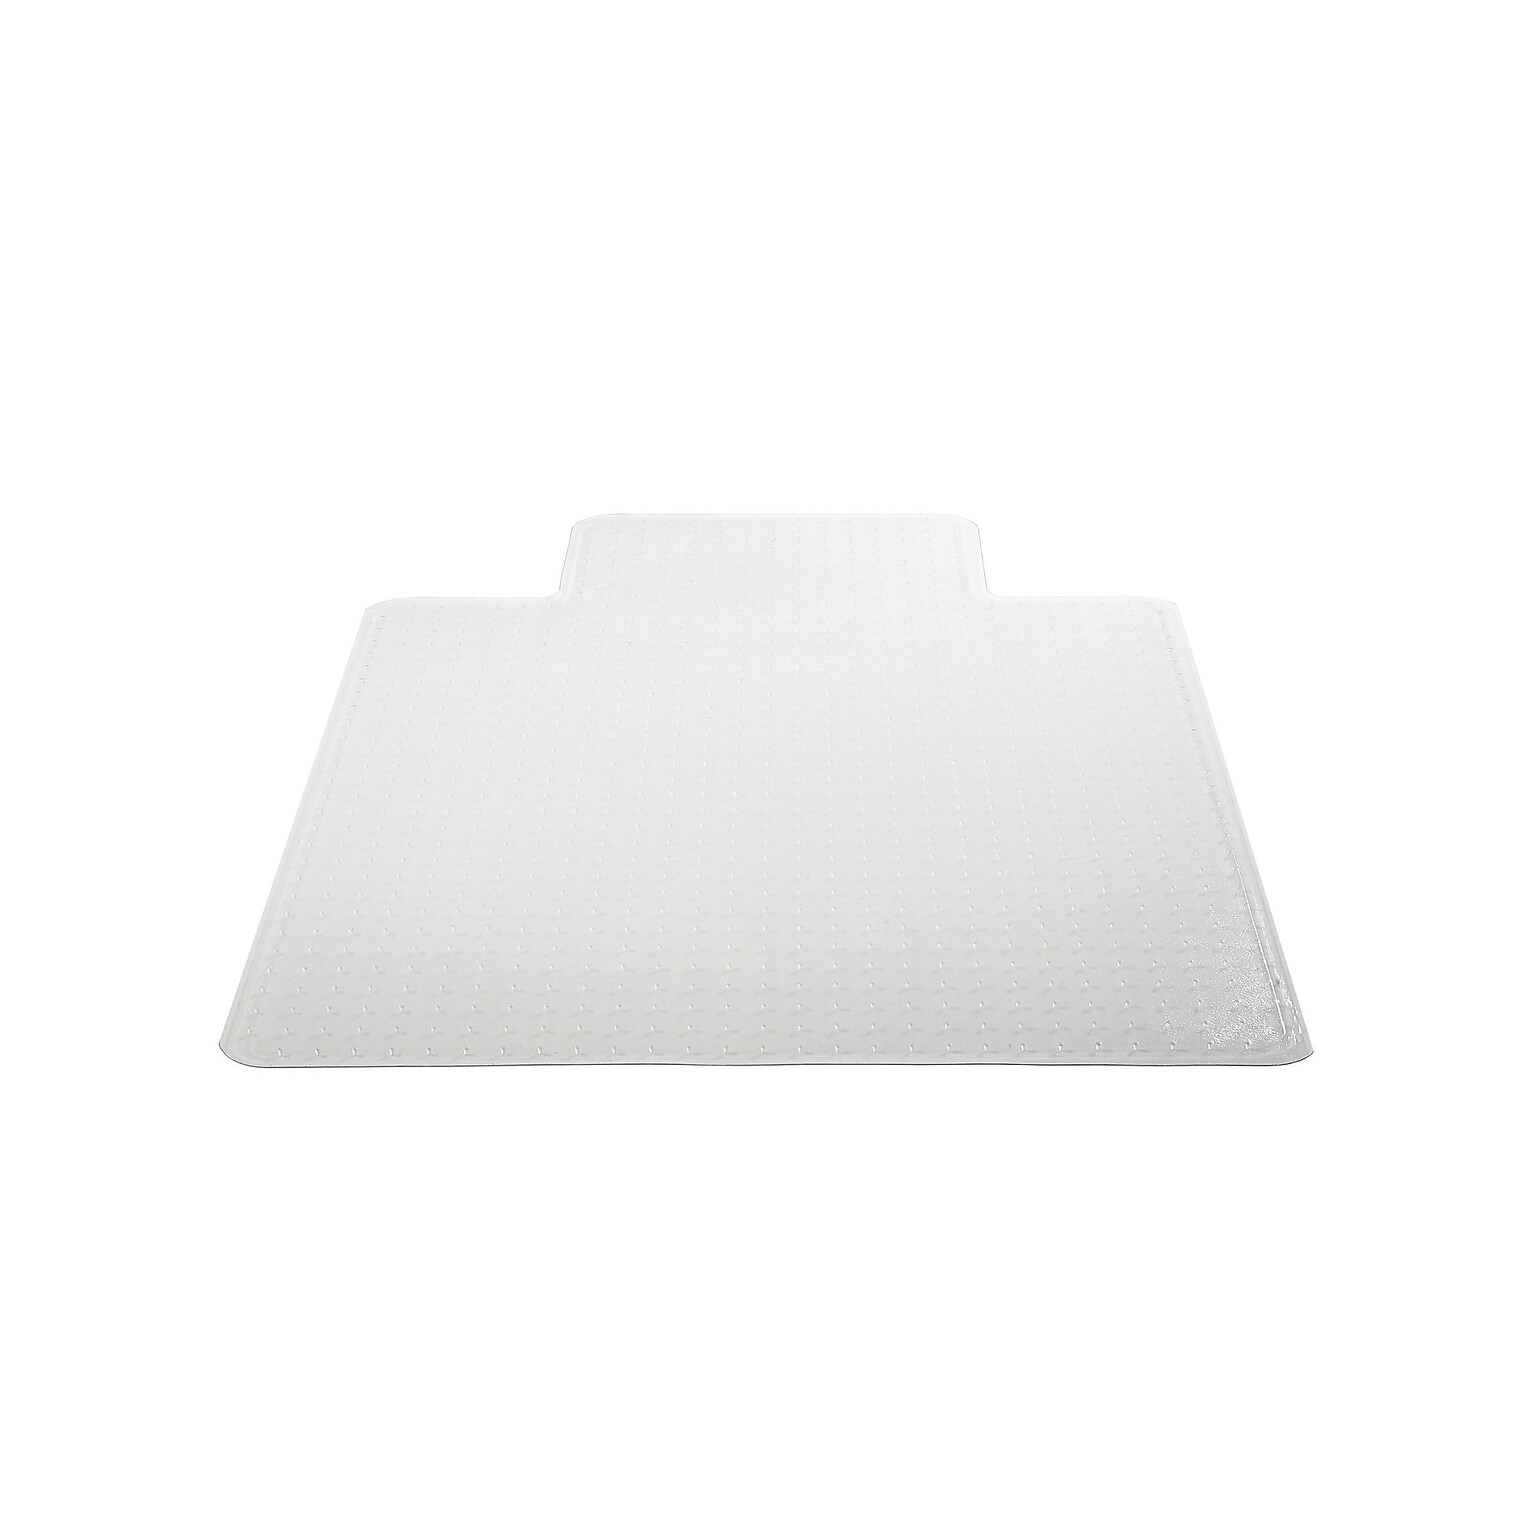 Deflect-O DuraMat Carpet Chair Mat with Lip, 45 x 53, Low-Pile, Clear (DEFCM13233)